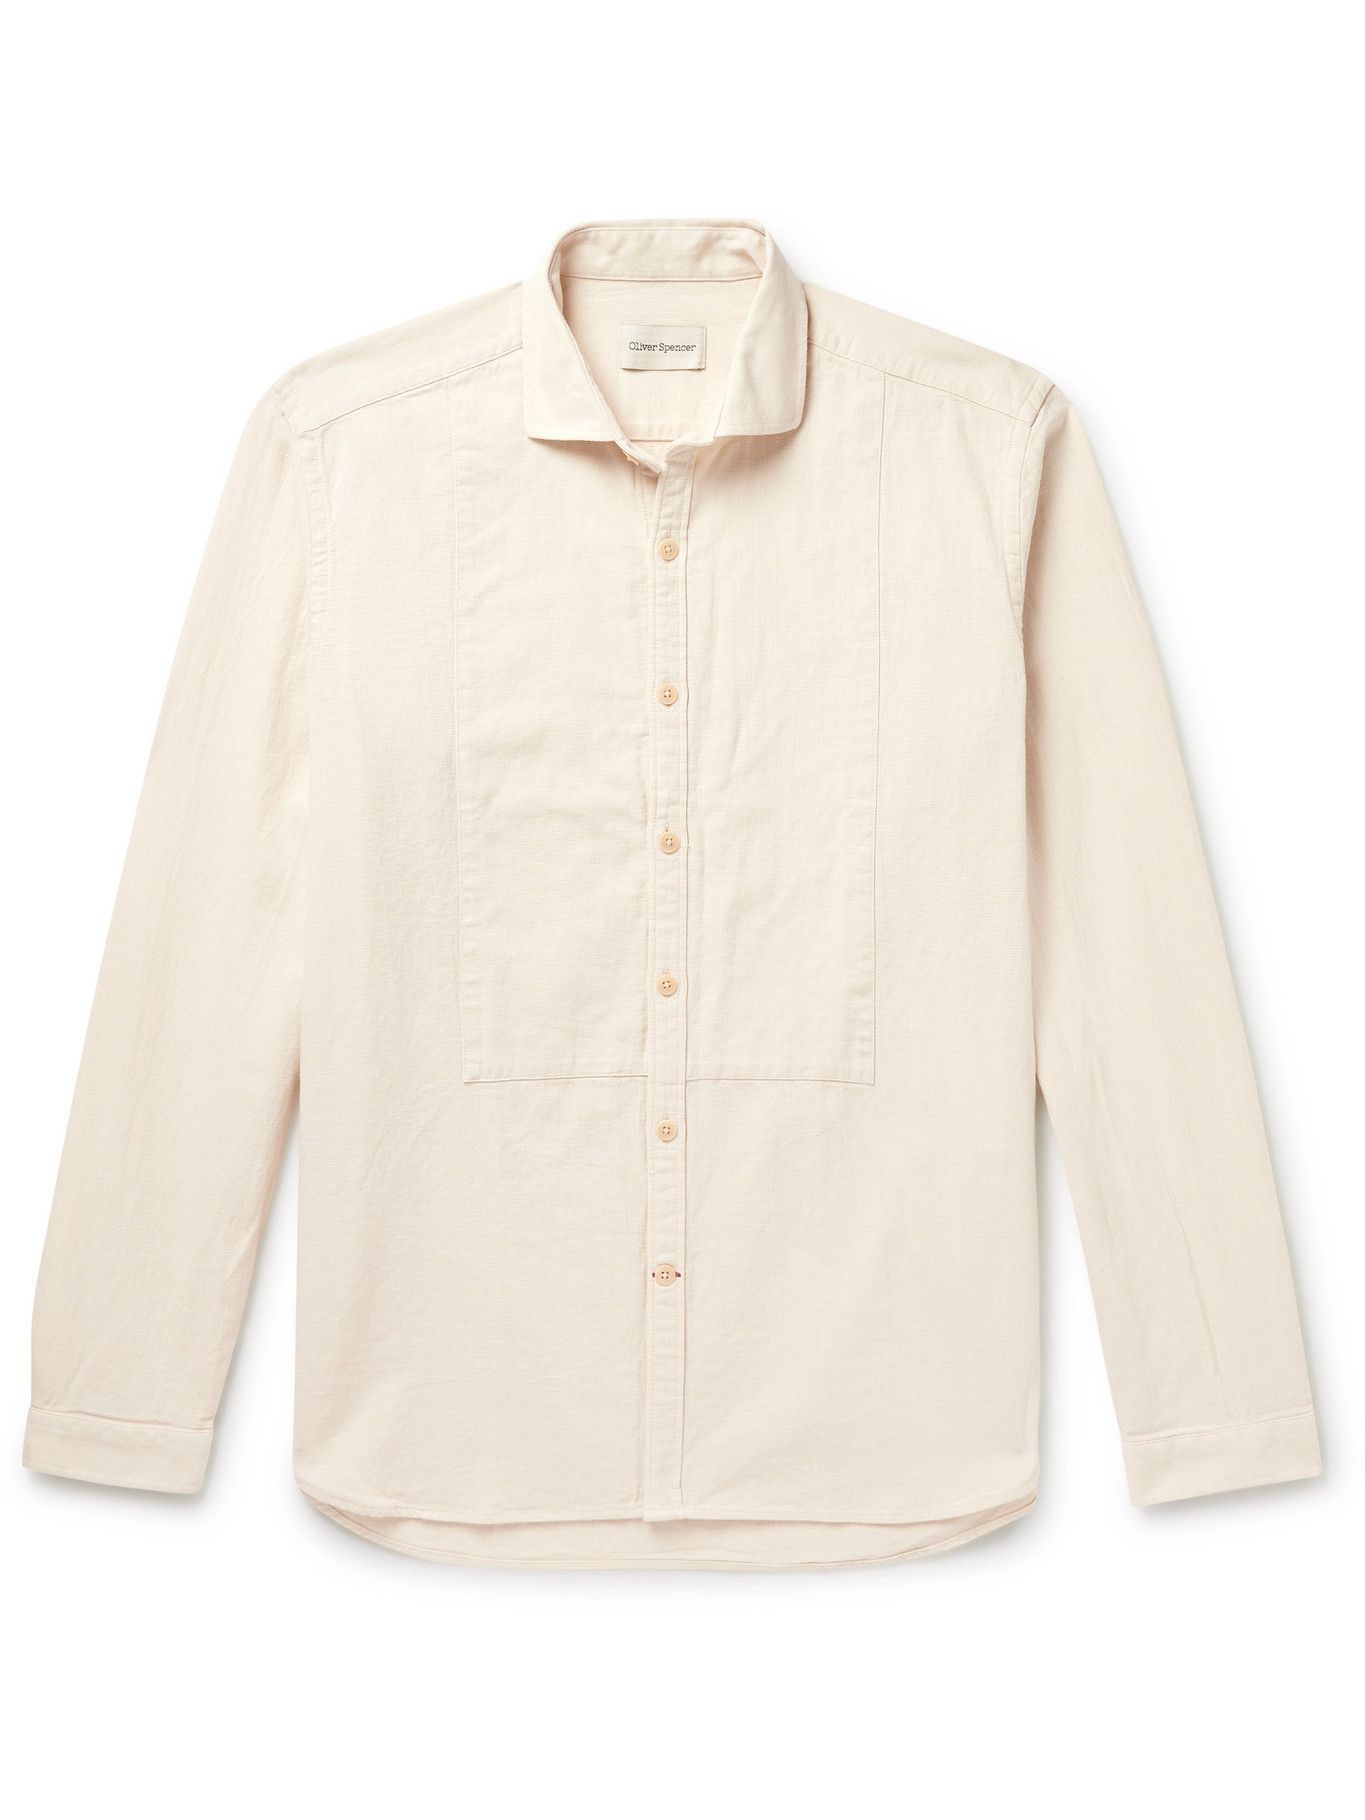 Photo: OLIVER SPENCER - Corrigan Cotton Shirt - Neutrals